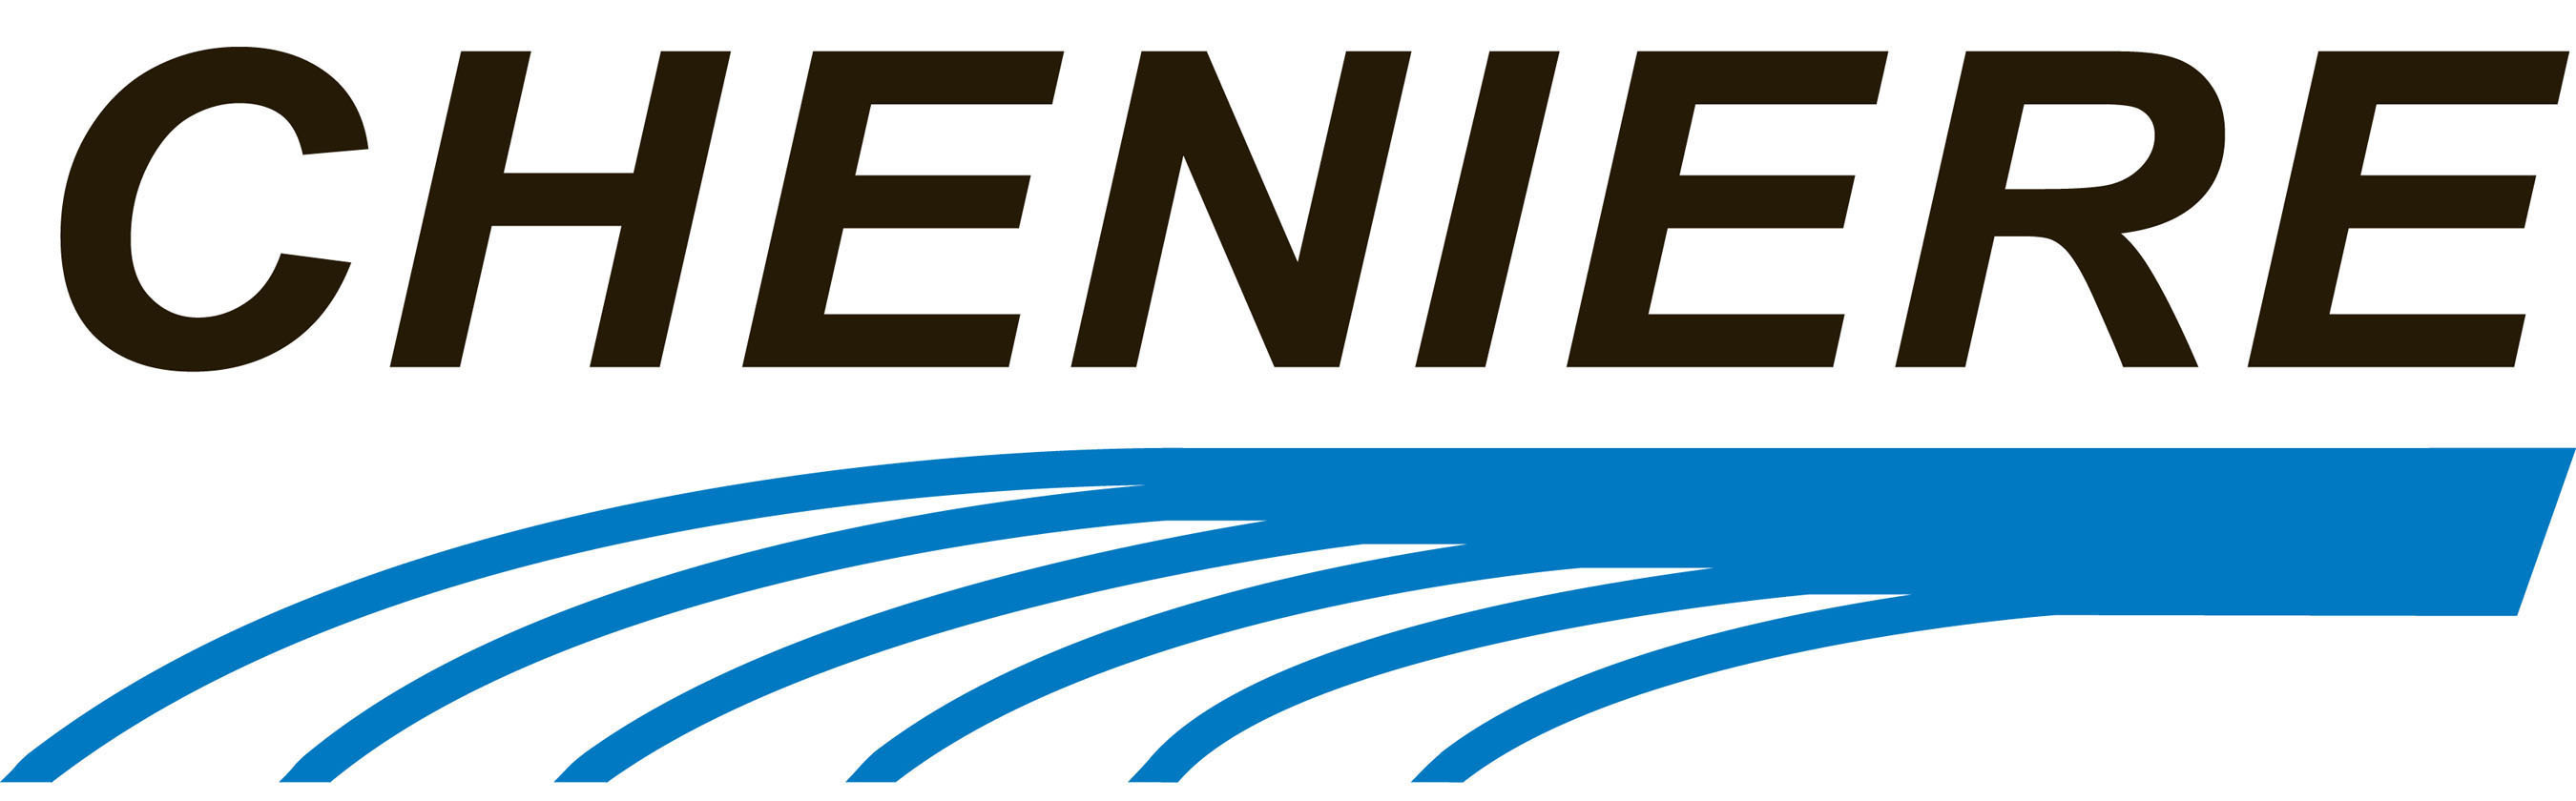 Cheniere logo.jpg